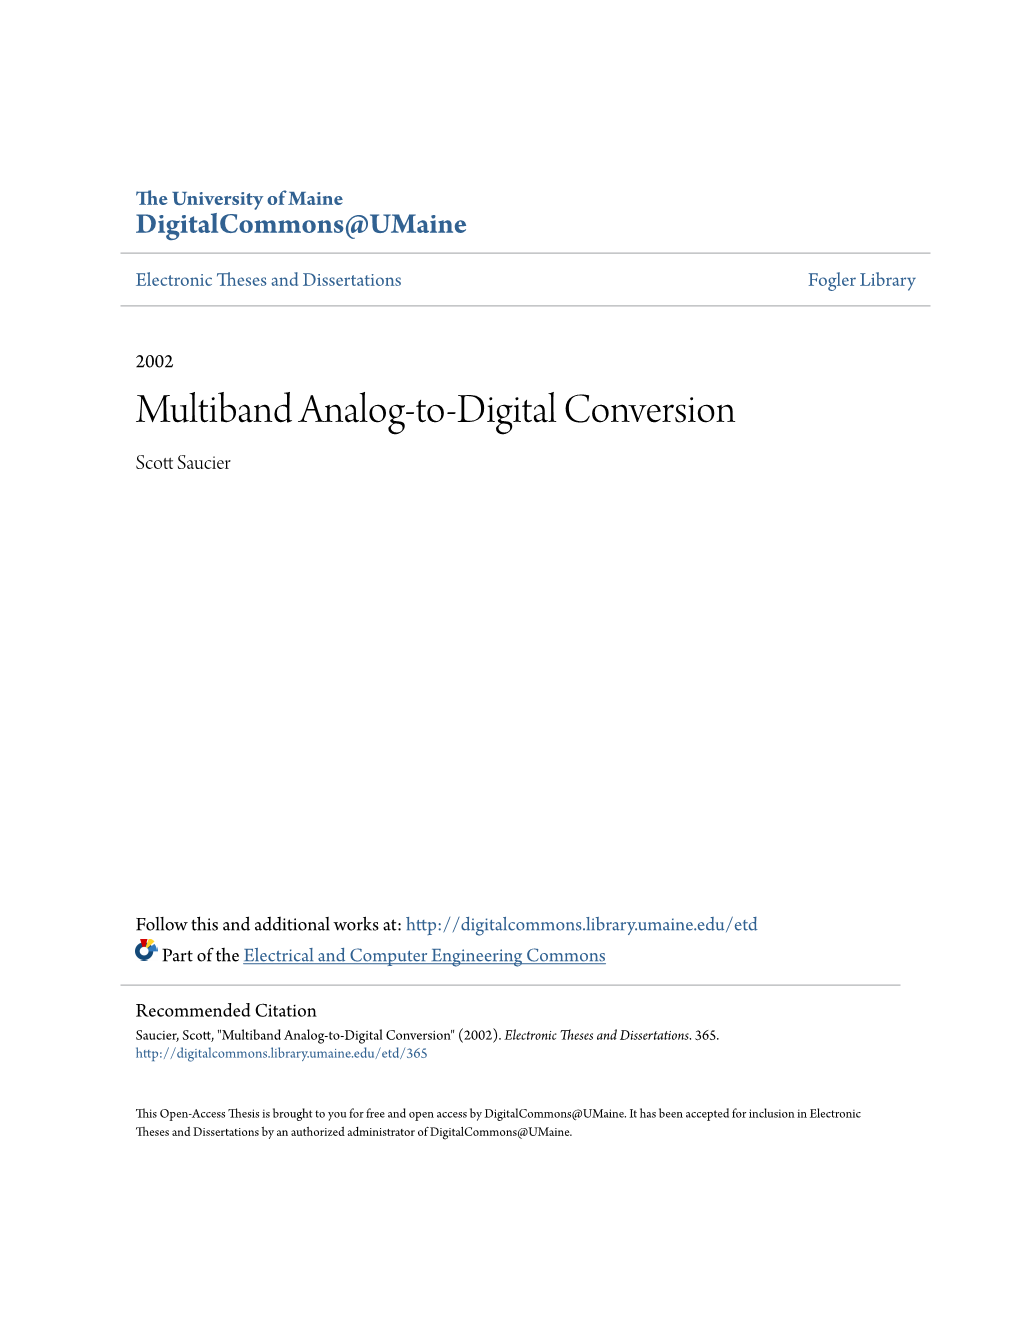 Multiband Analog-To-Digital Conversion Scott As Ucier